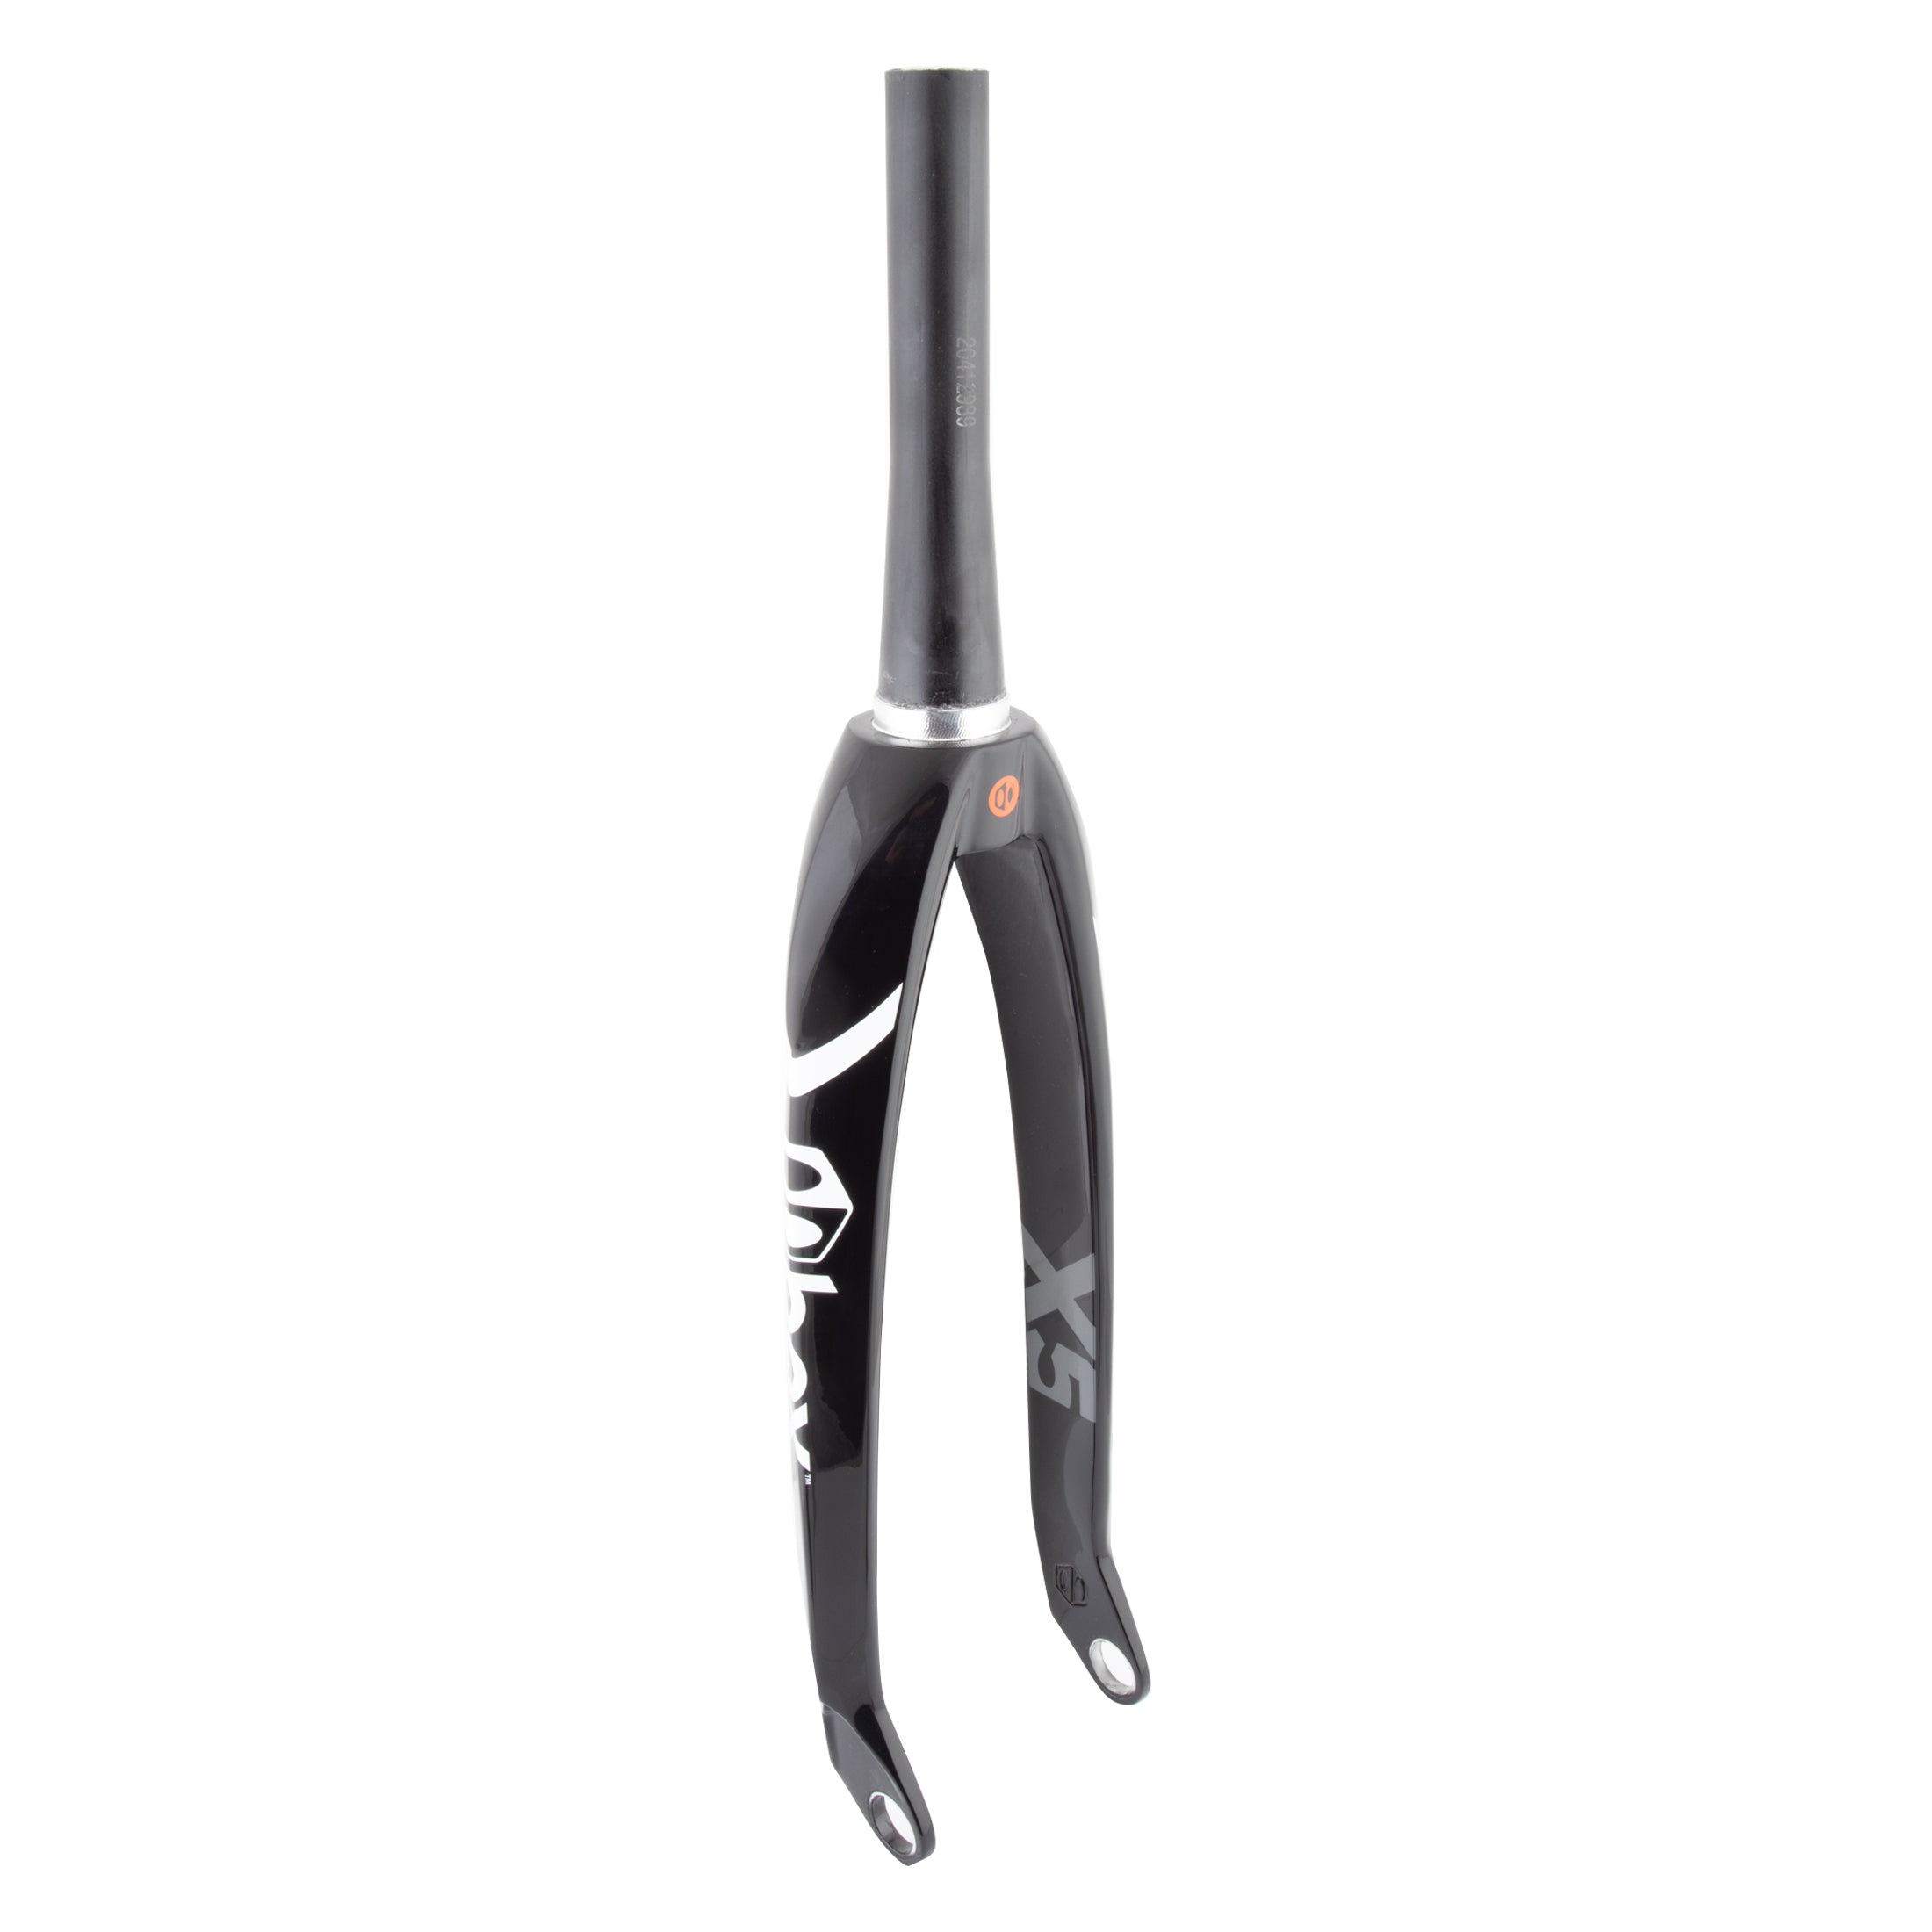 Box One Carbon 20mm Forks kit – Powers Bike Shop